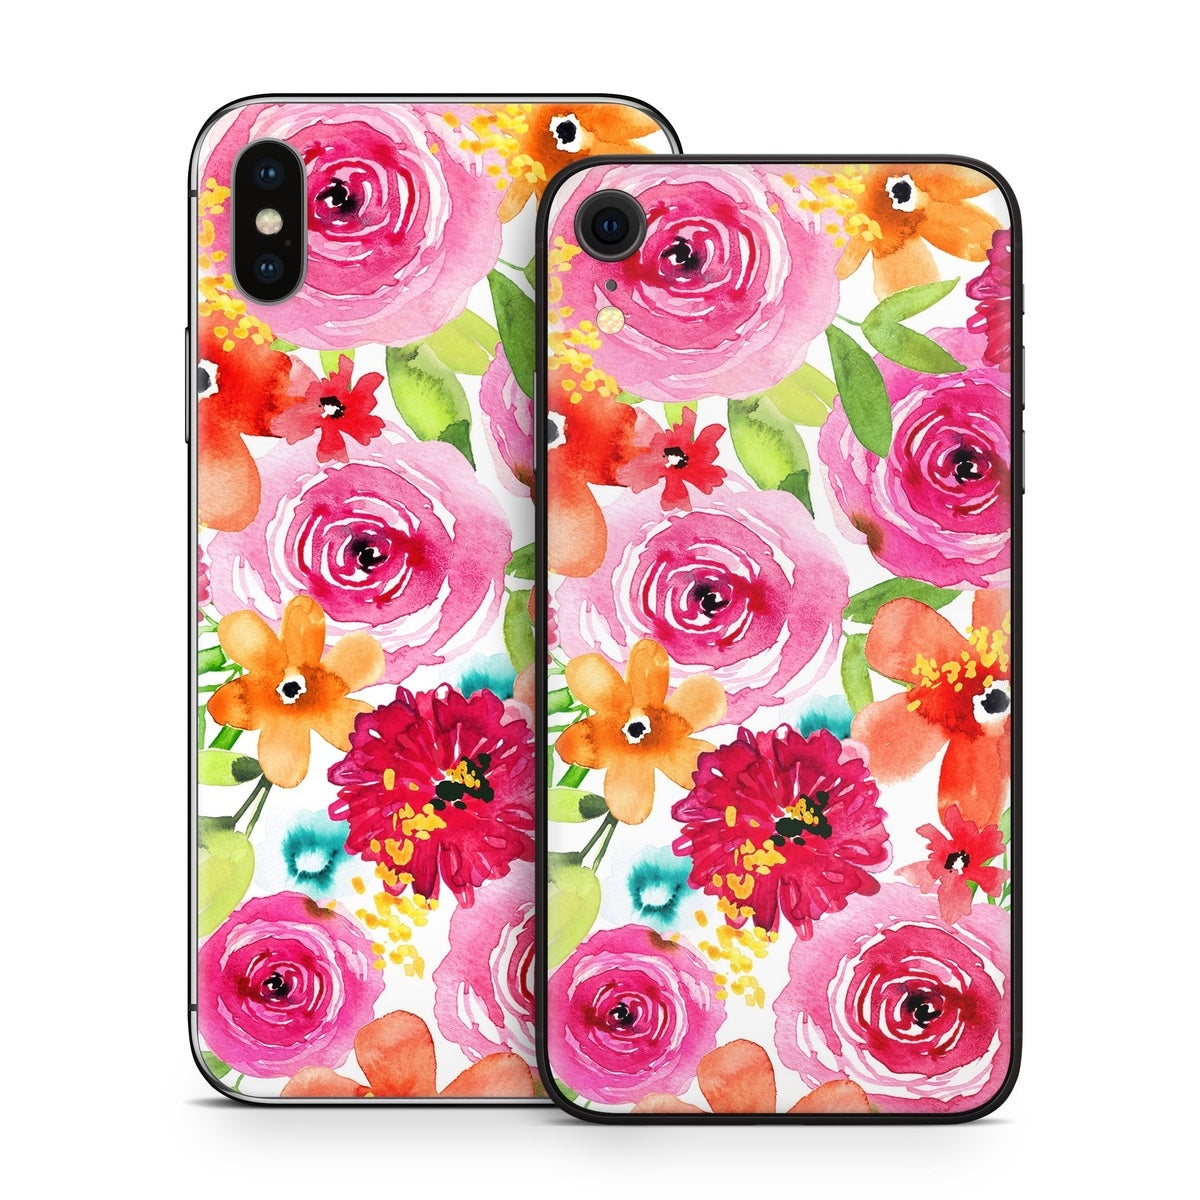 Floral Pop - Apple iPhone X Skin